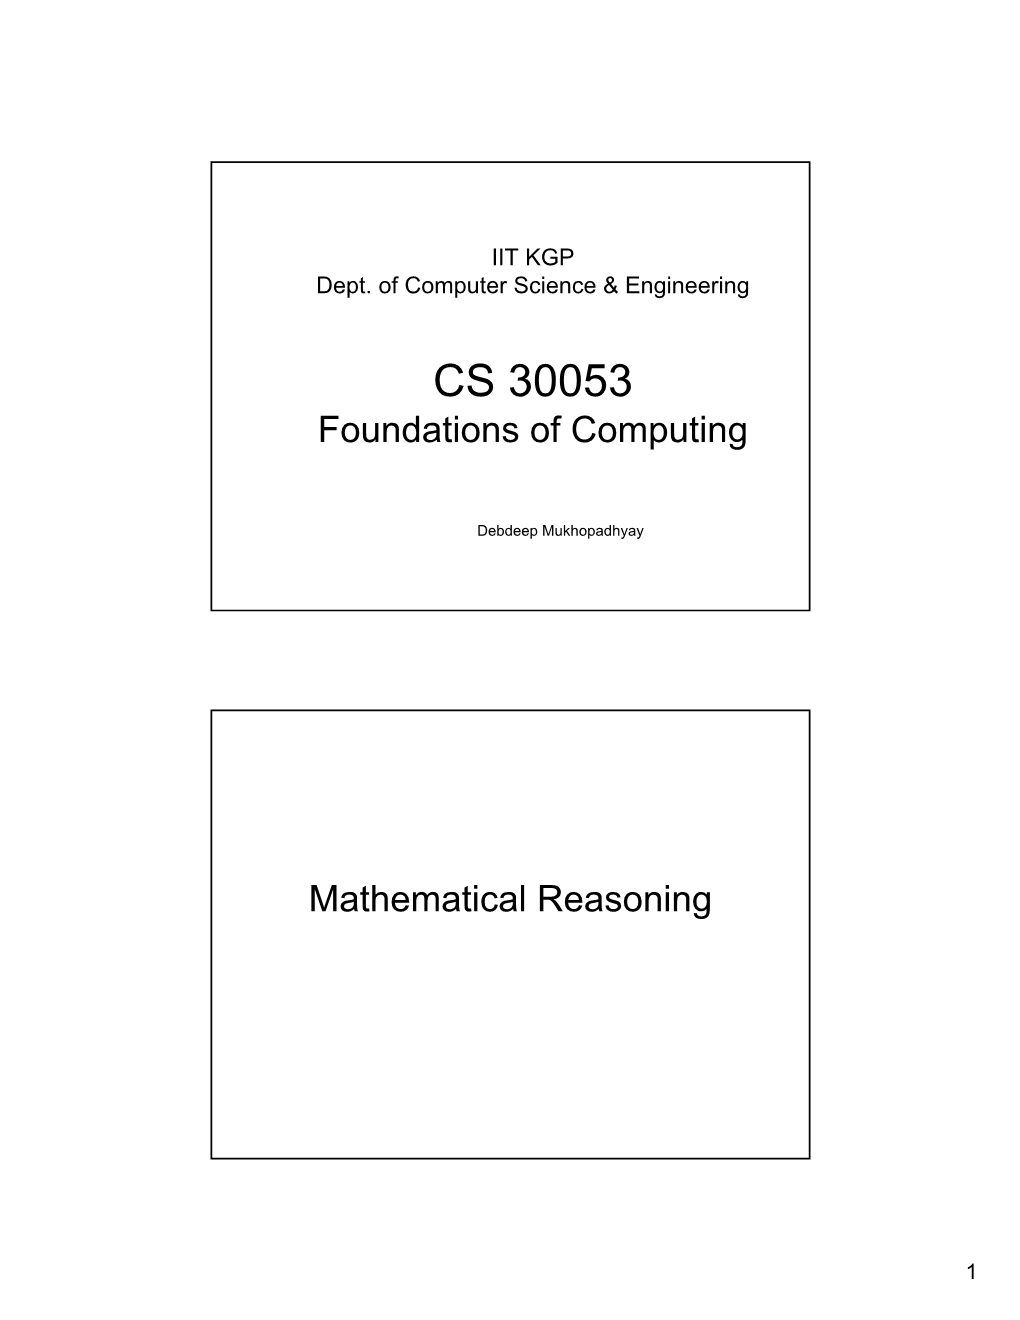 CS 30053 Foundations of Computing